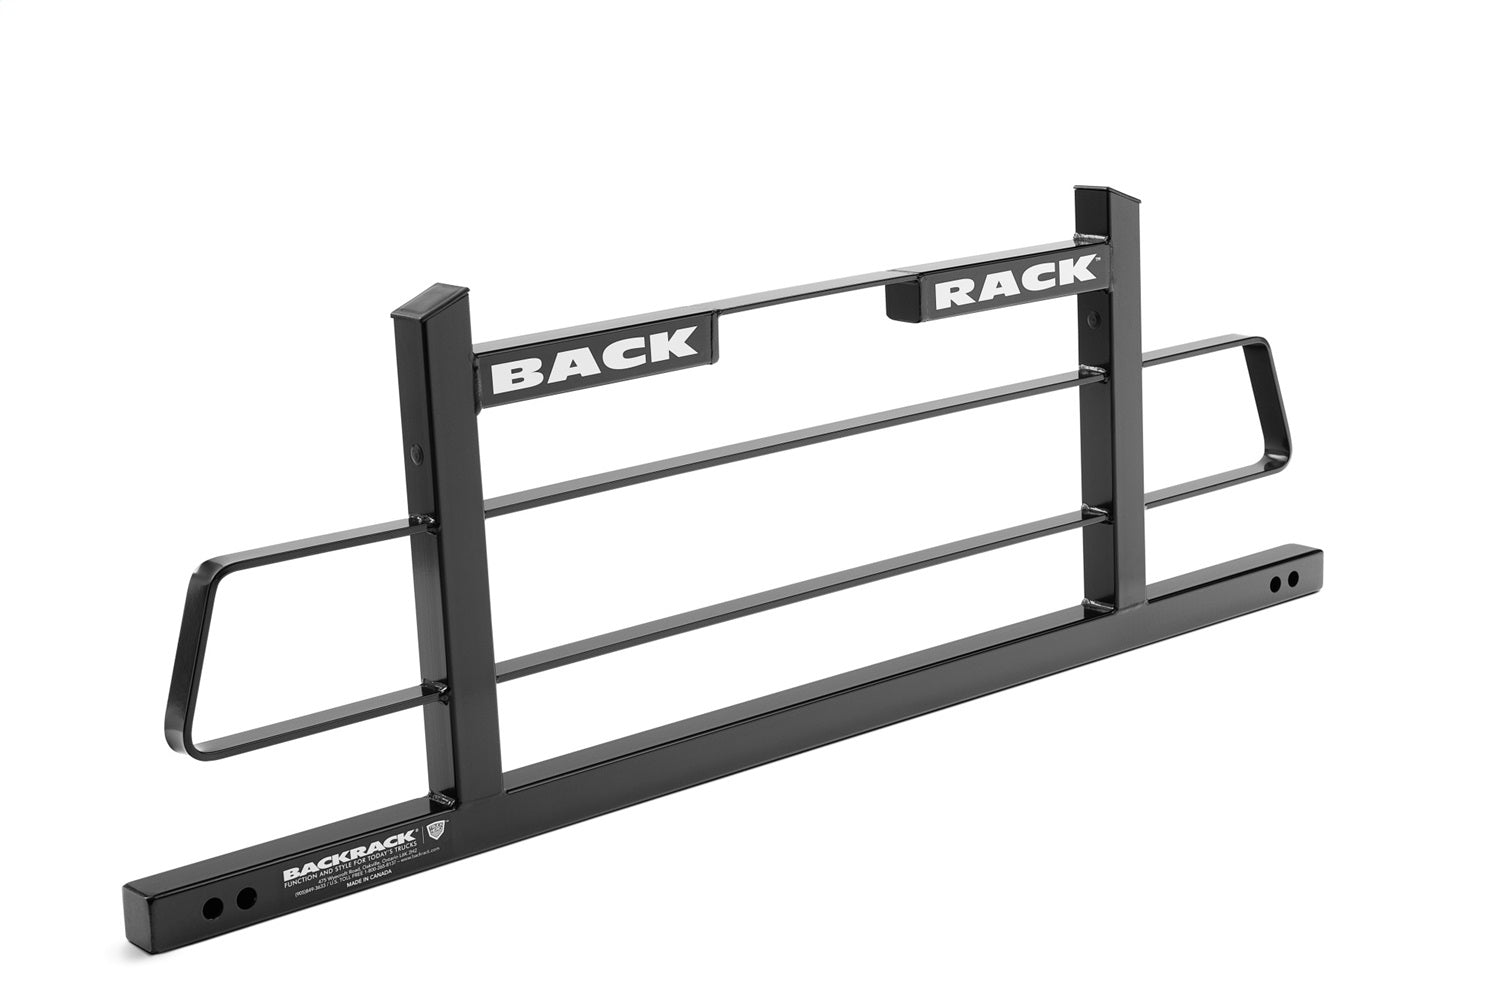 Backrack 15003 Backrack Headache Rack Frame